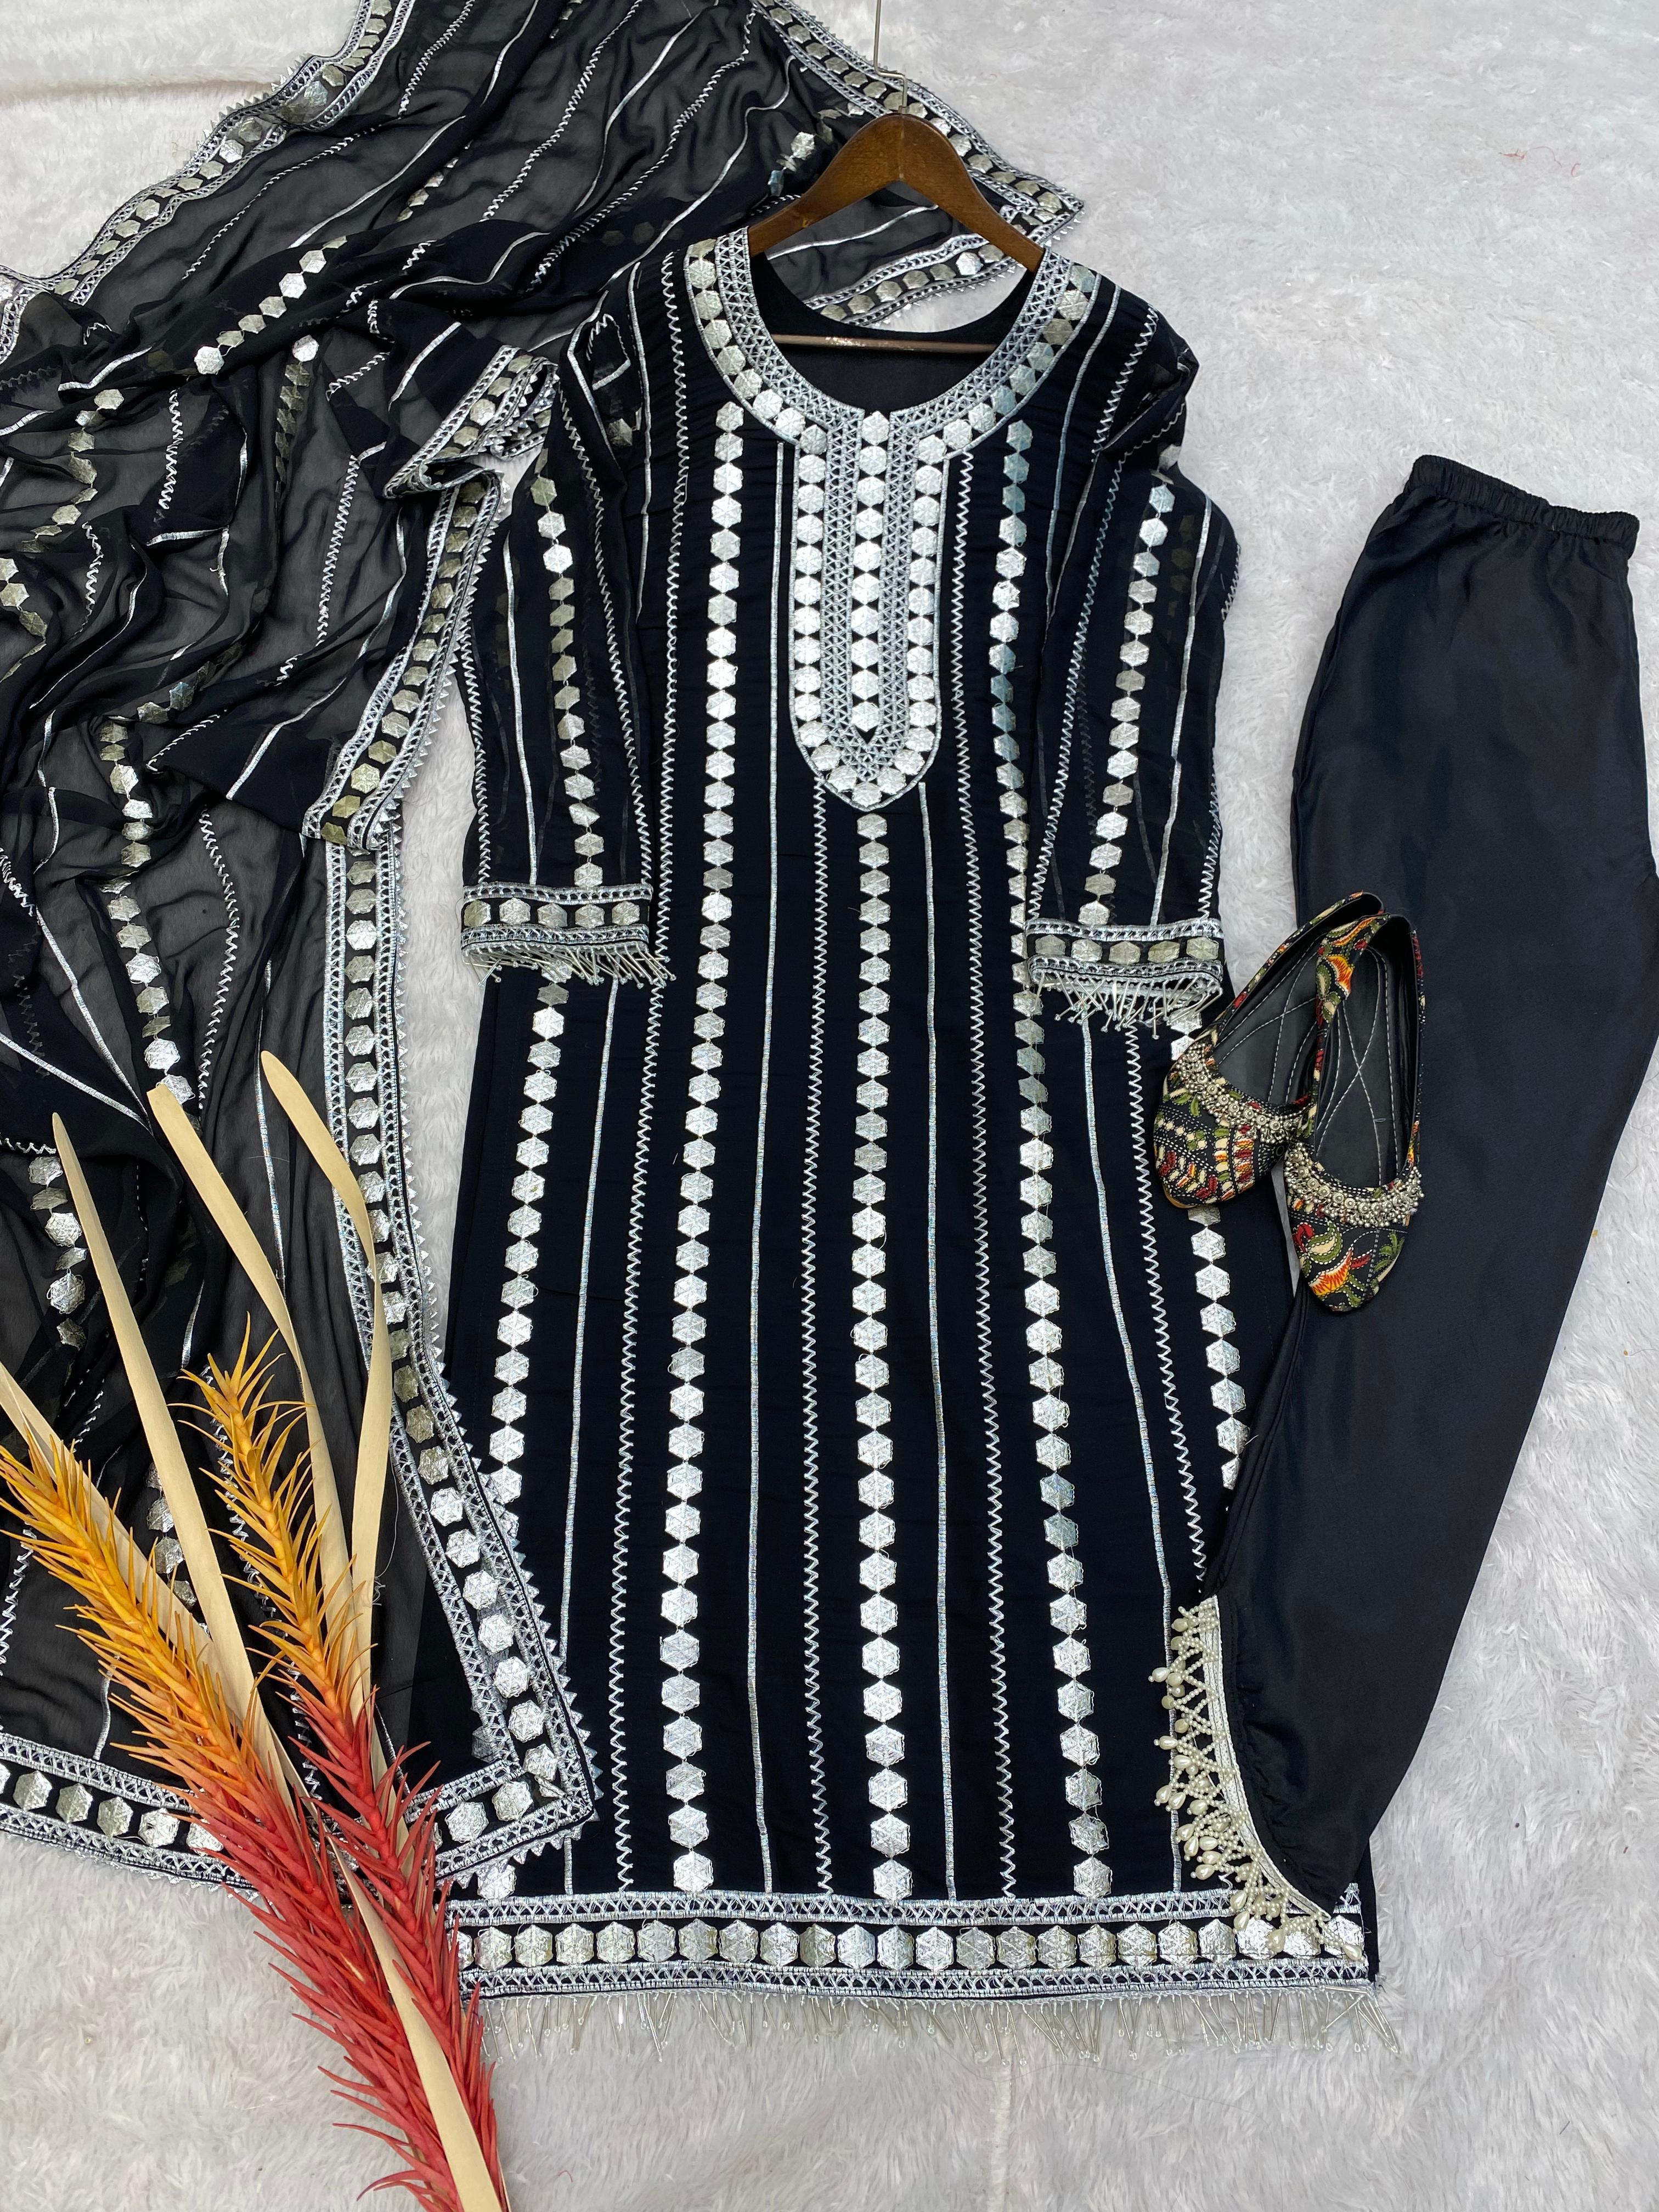 Delightful Embroidery Work Black Color Salwar Suit